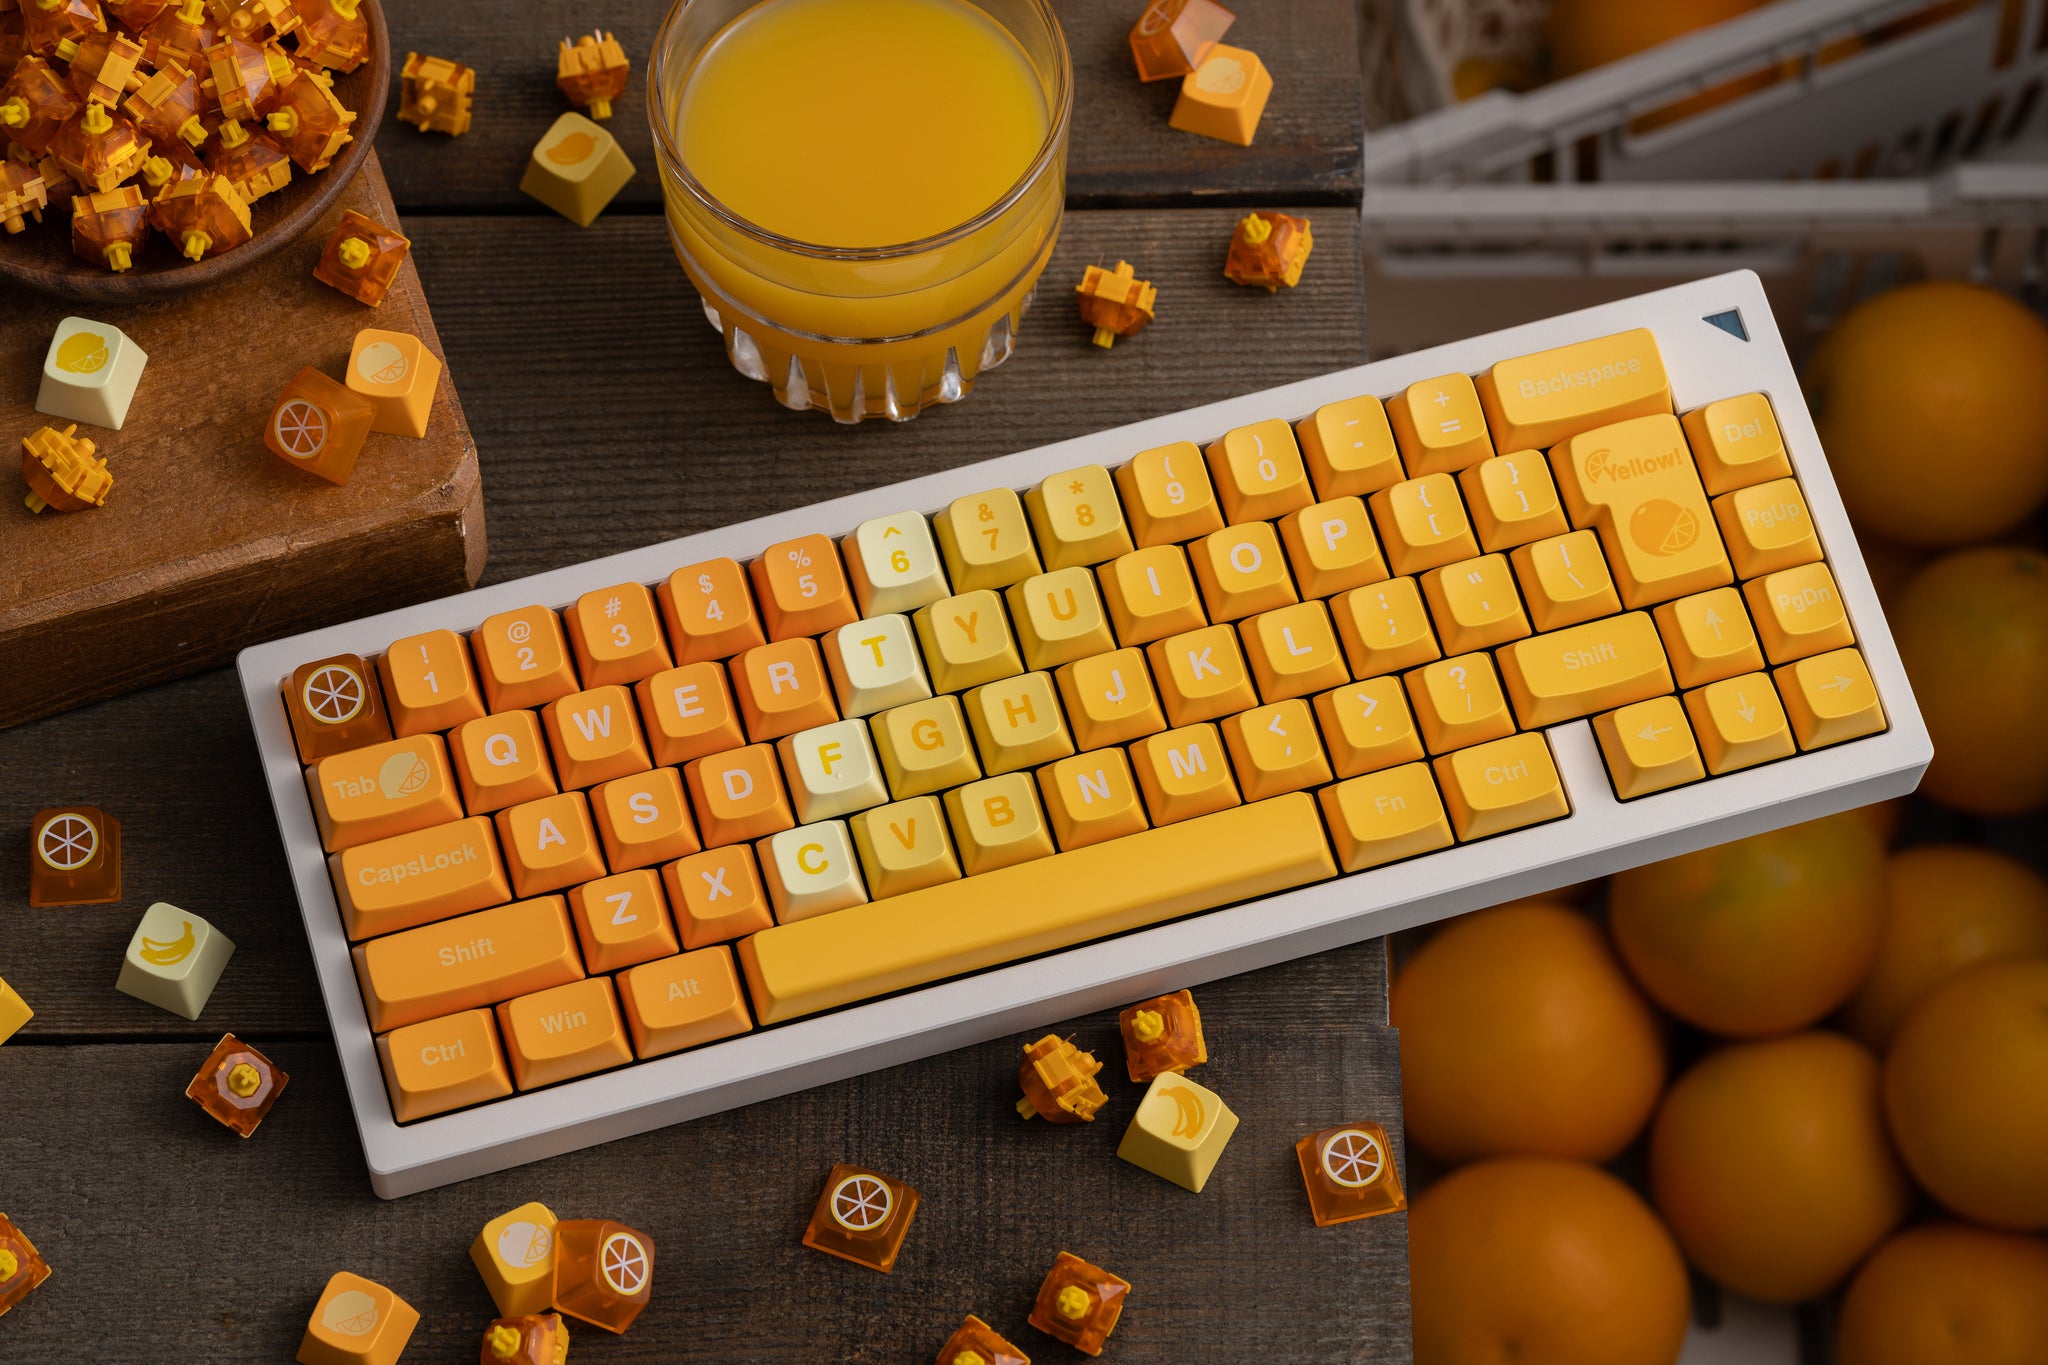 Chosfox exclusive-designed mechanical keyboard in orange.